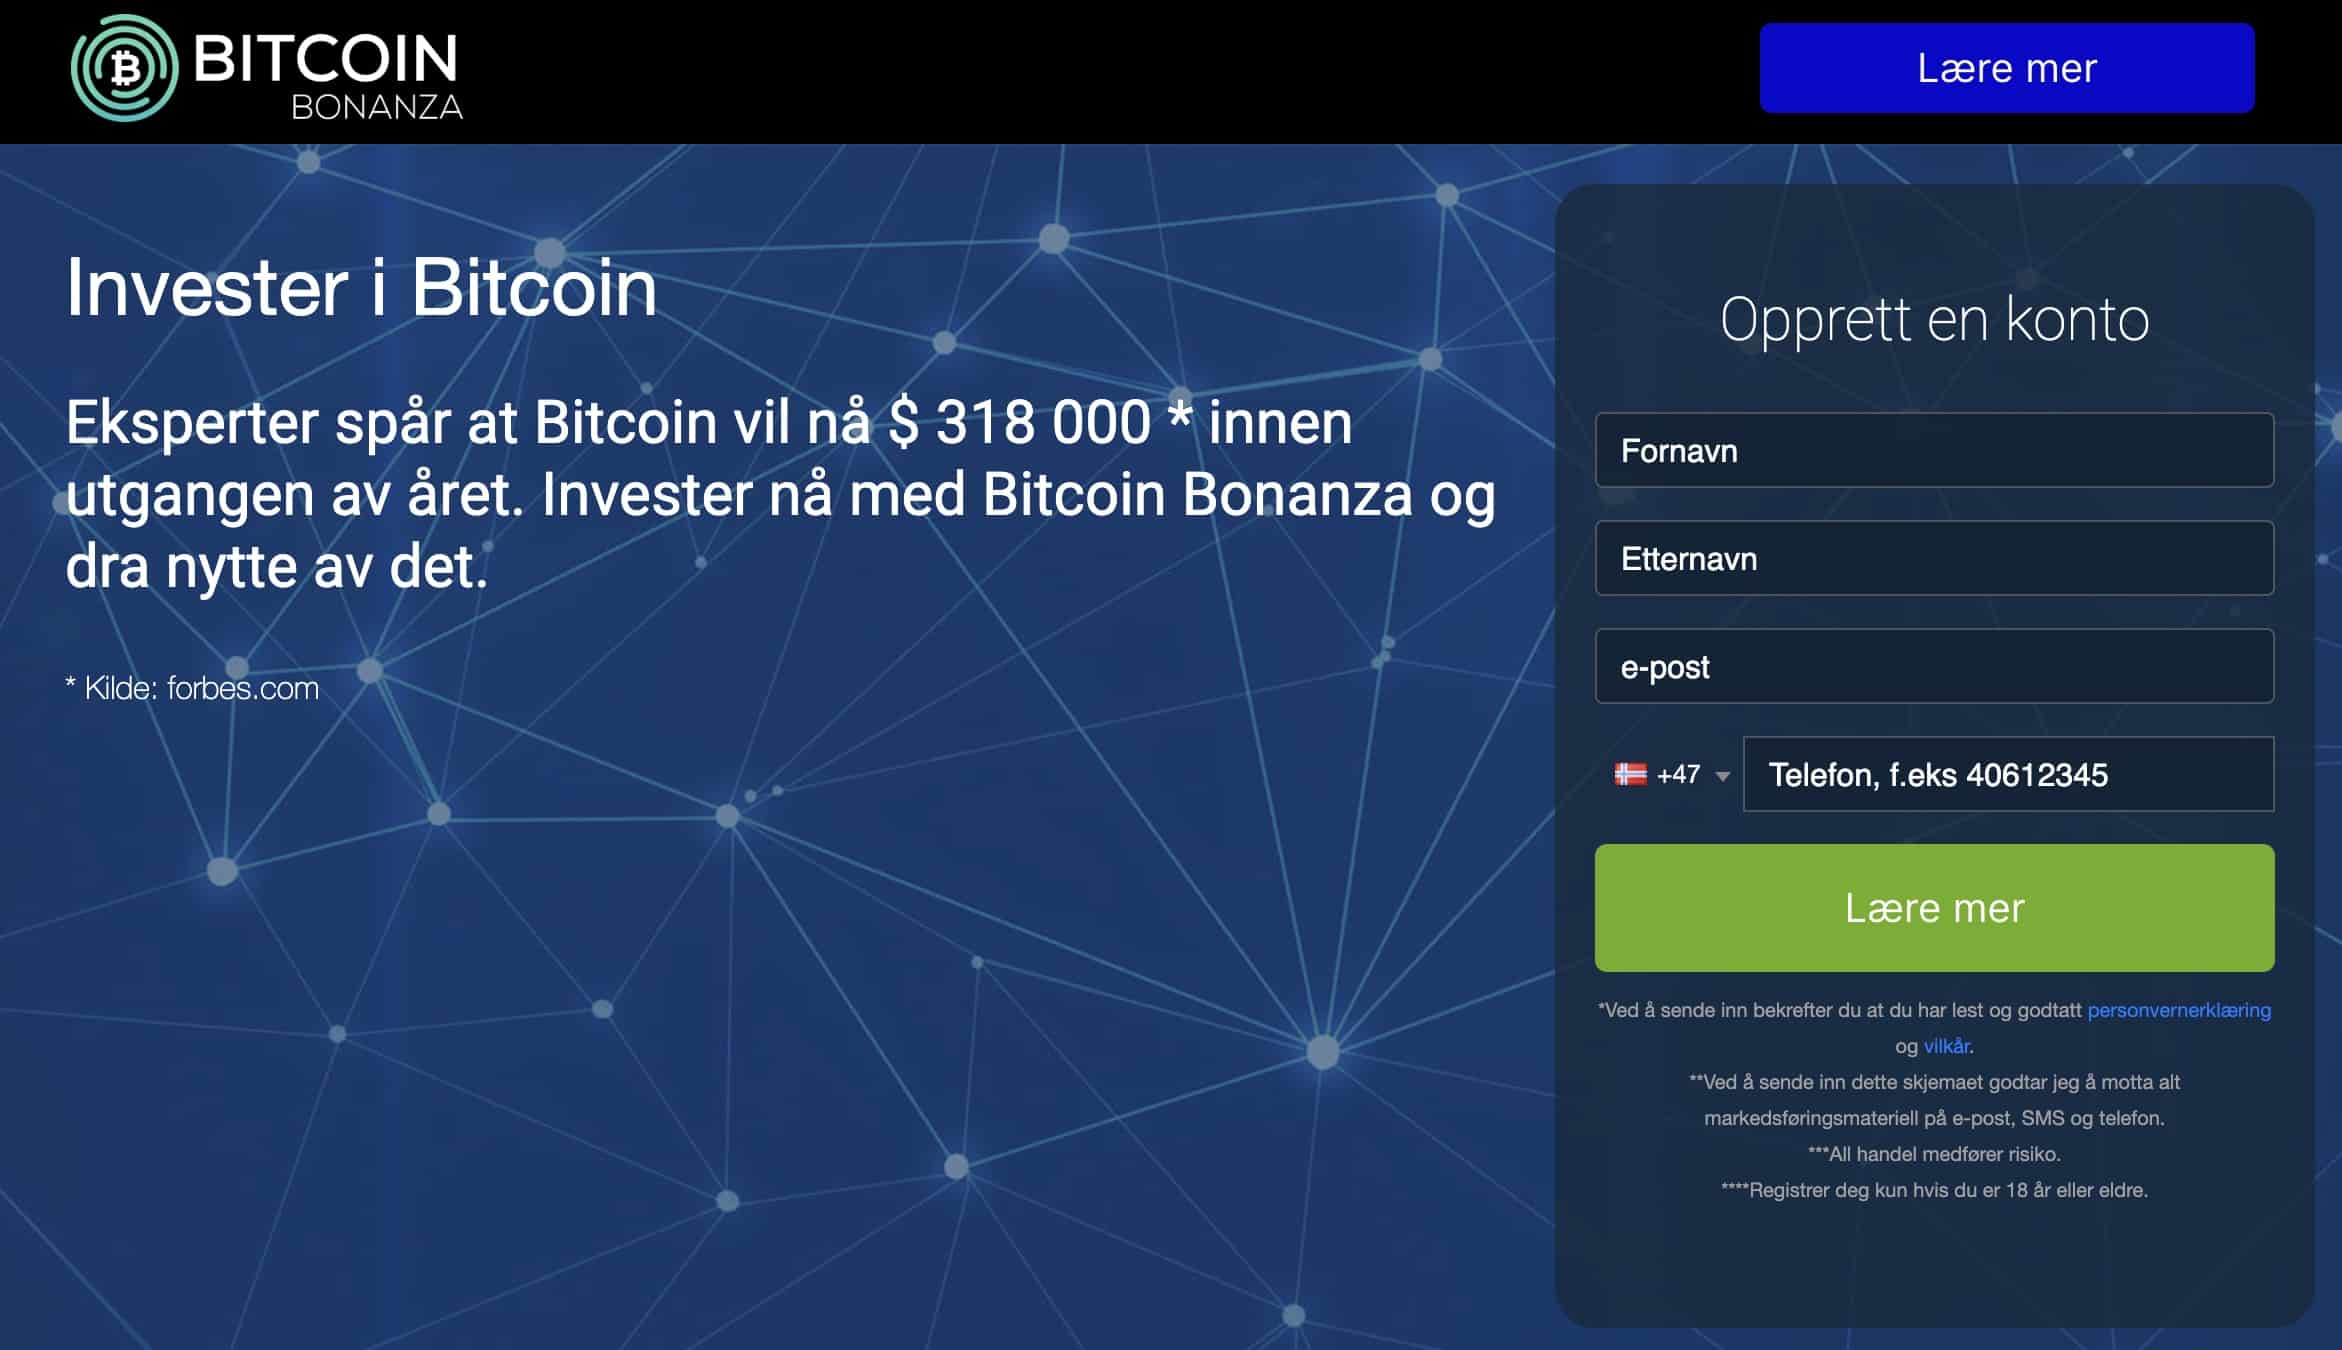 Bitcoin Bonanza plattform